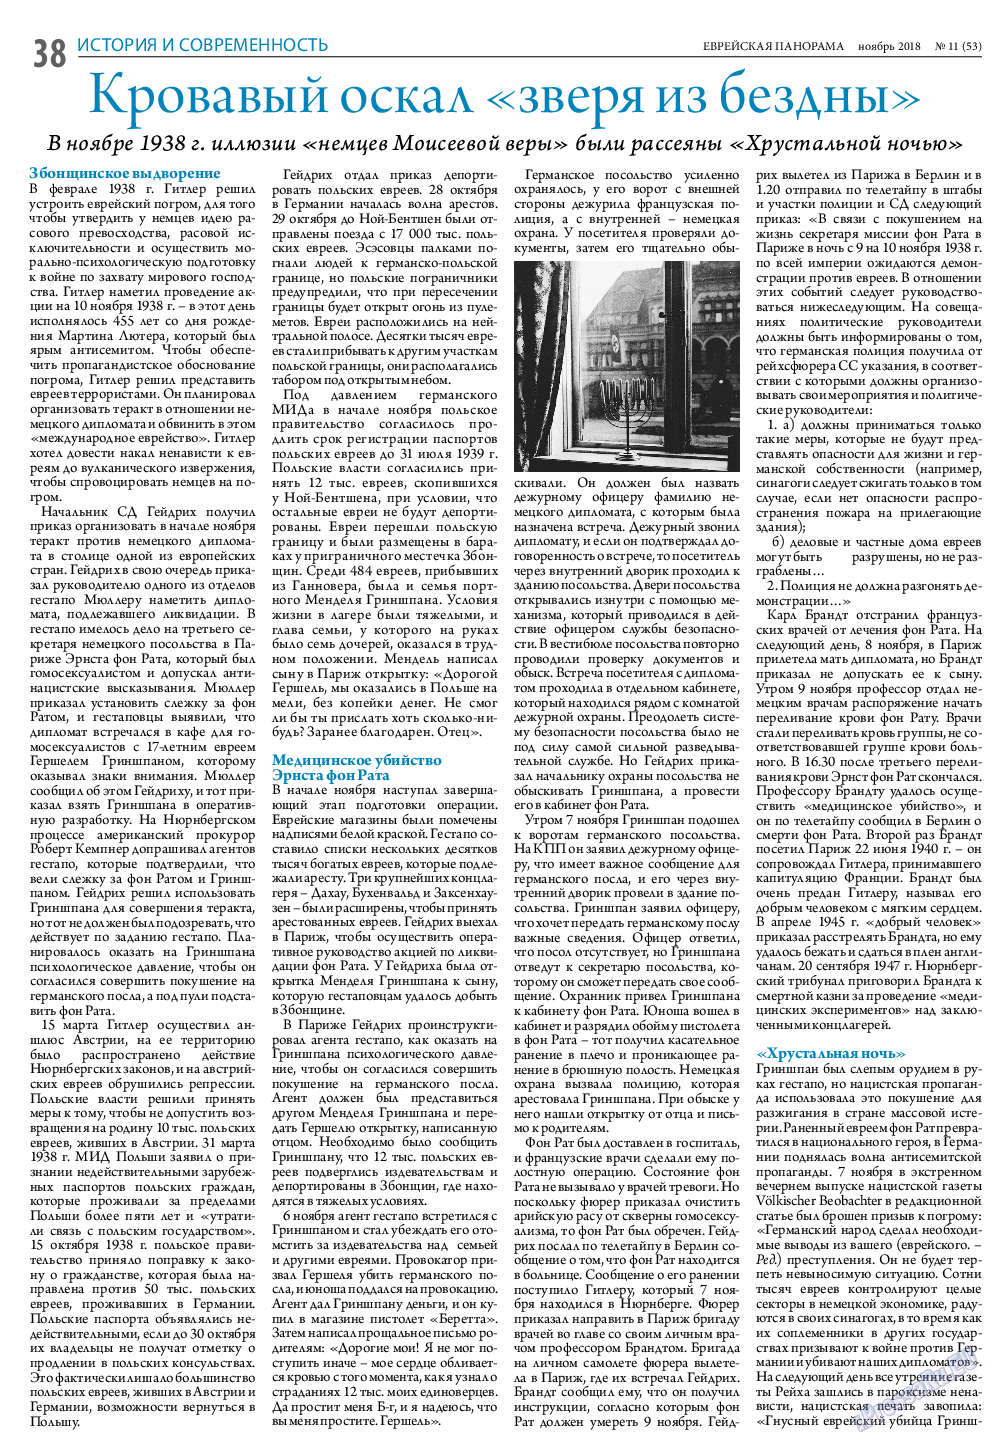 Еврейская панорама, газета. 2018 №11 стр.38